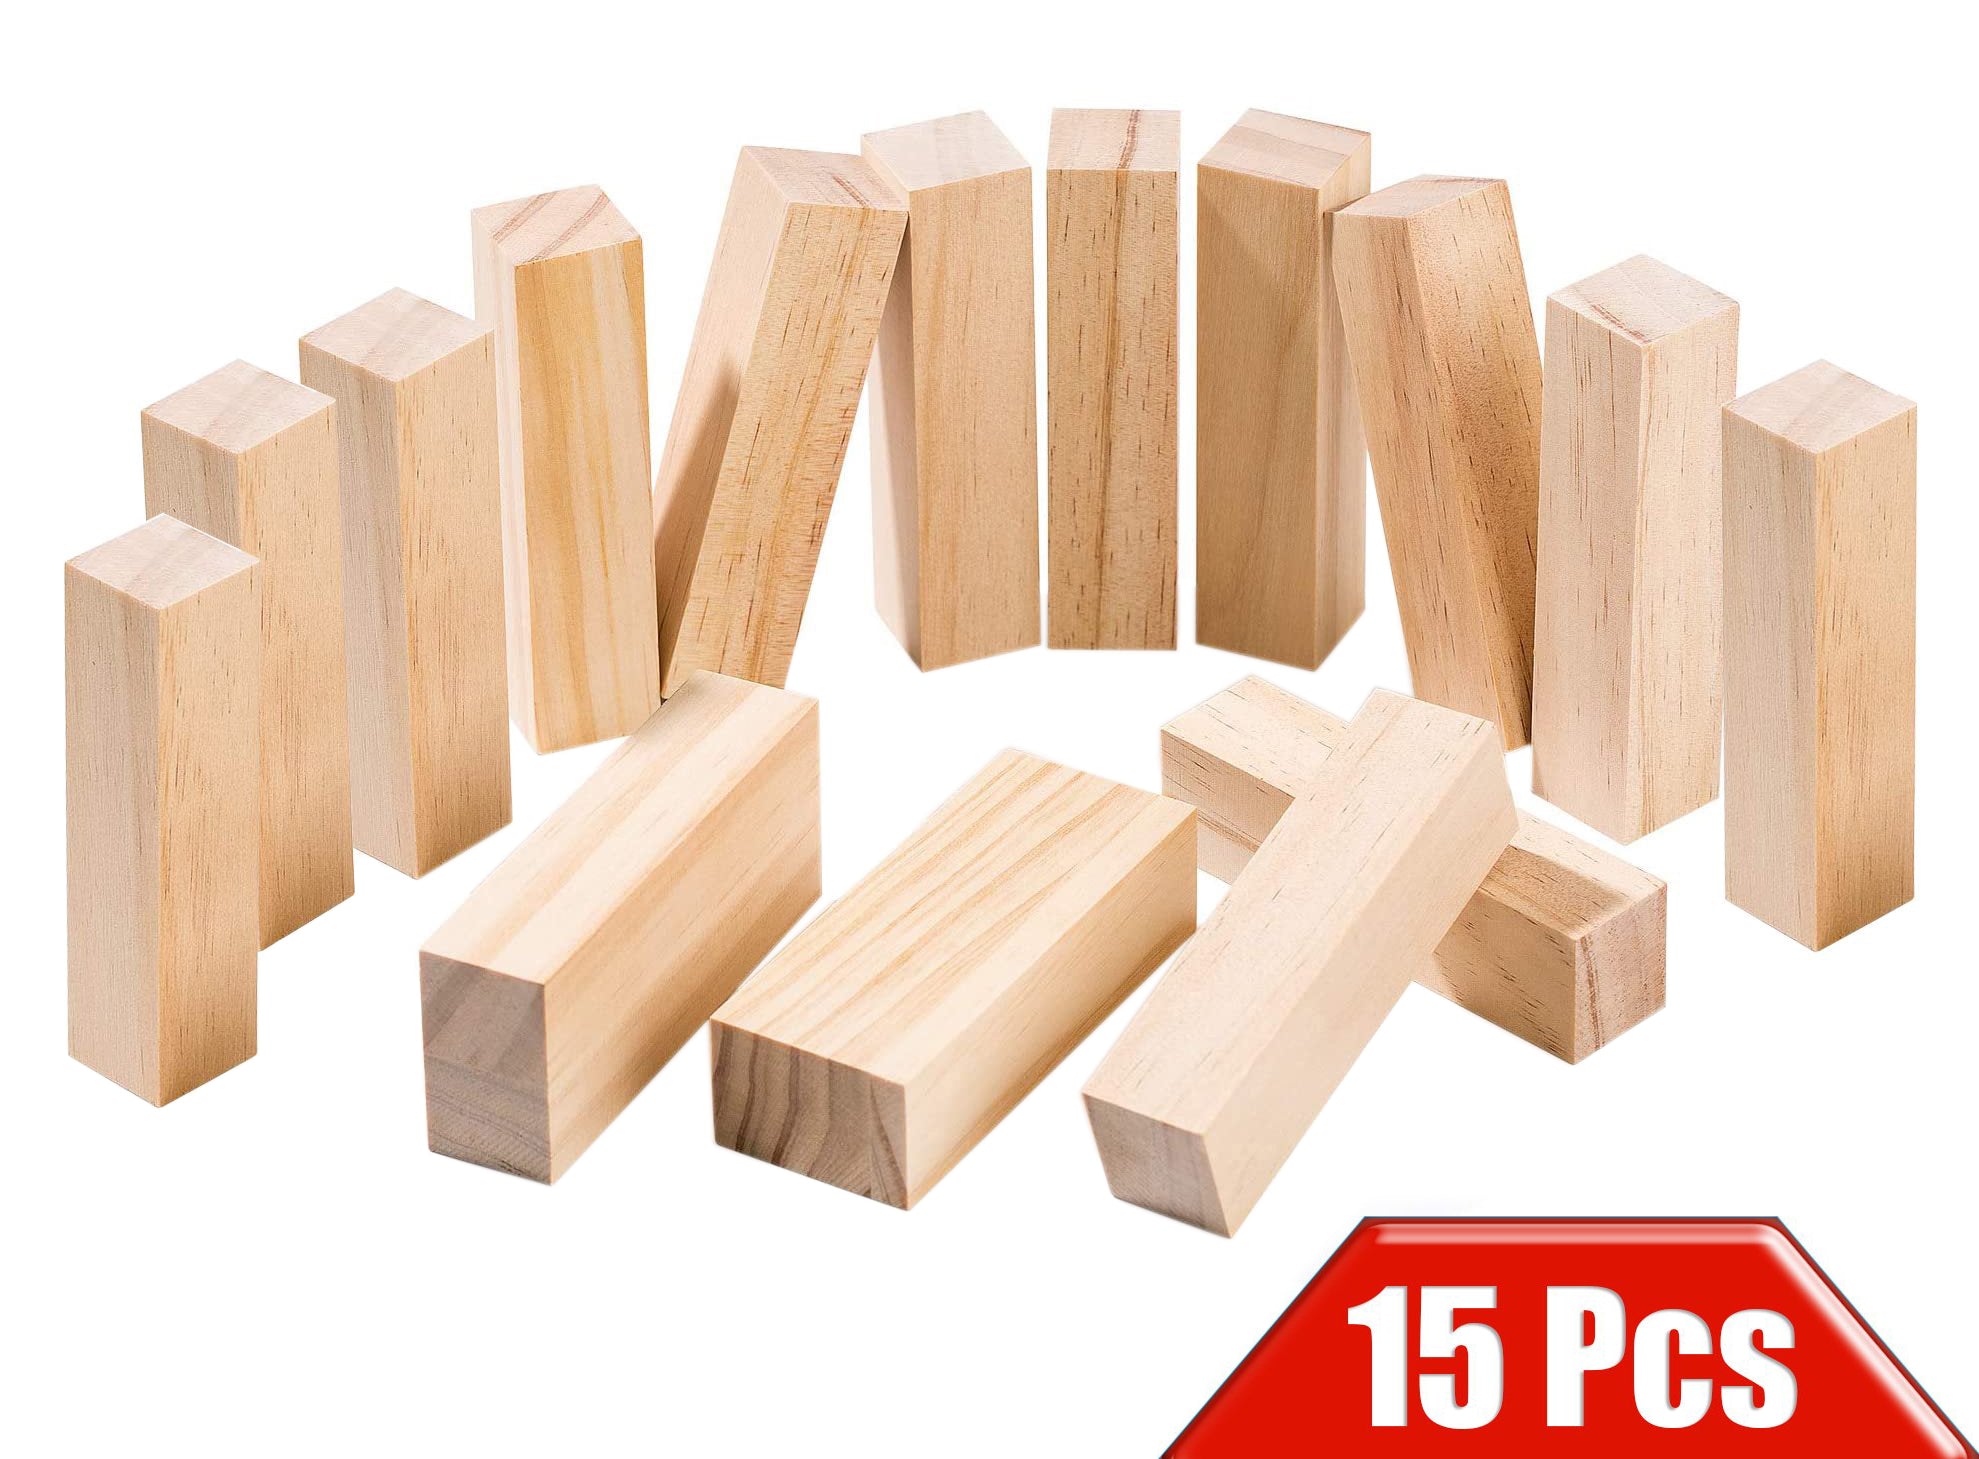  EXCEART 10pcs Pine Carved Wood Blocks Carving Wood